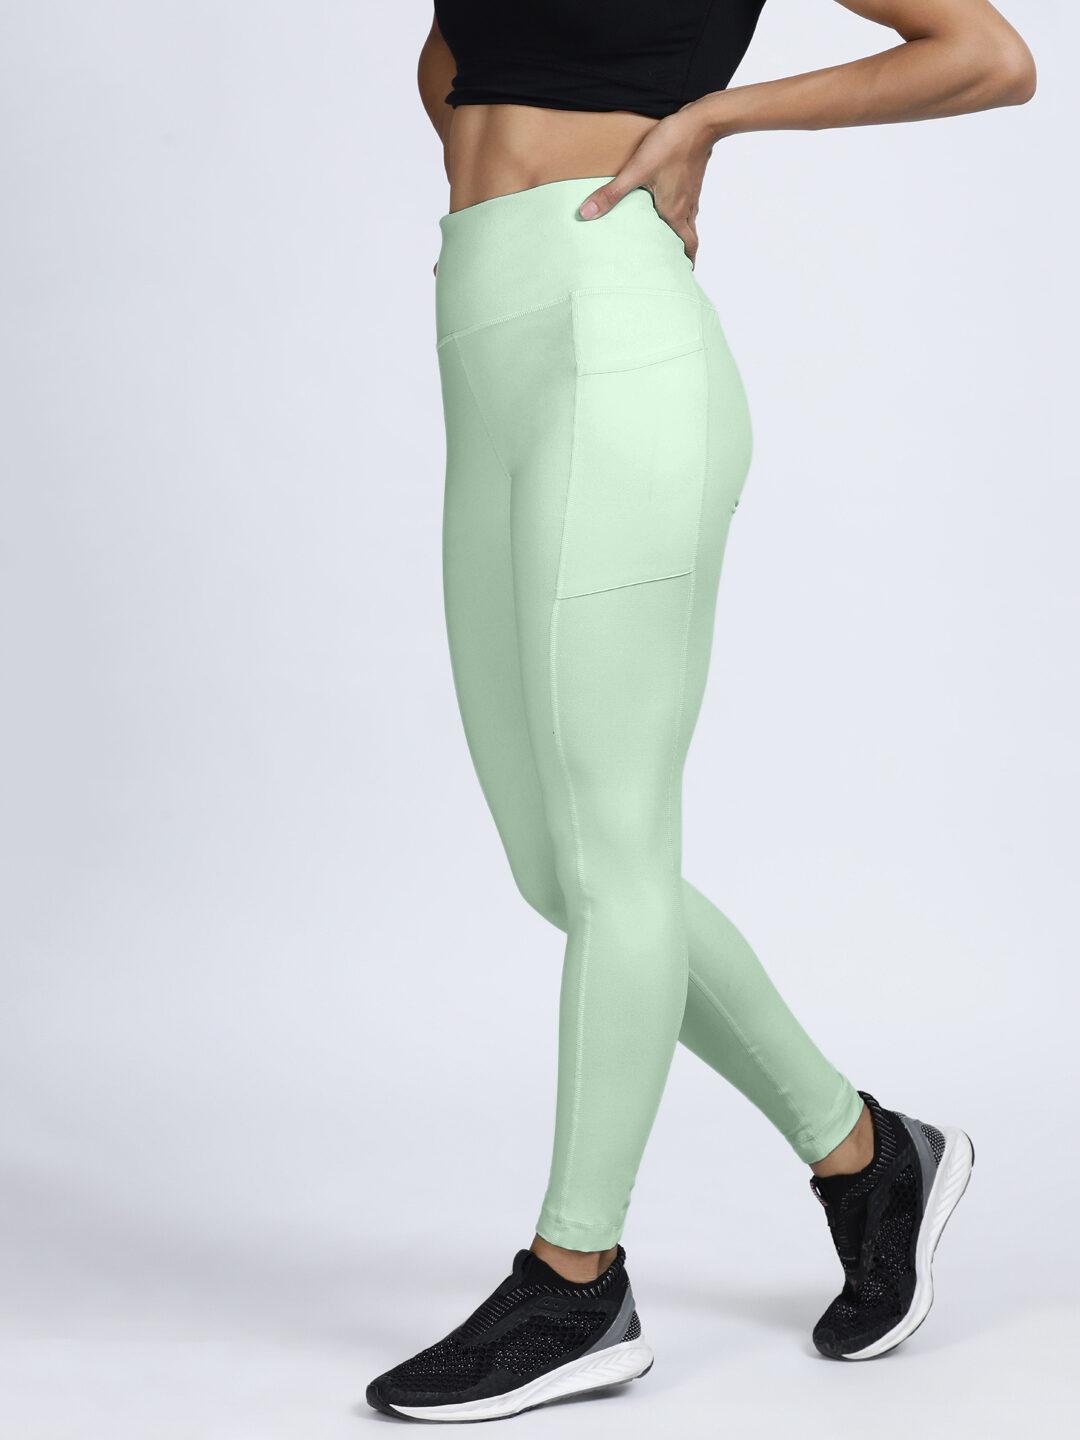 Stash Me In Back Zipper leggings for Women – Mint Green – MICHELLE